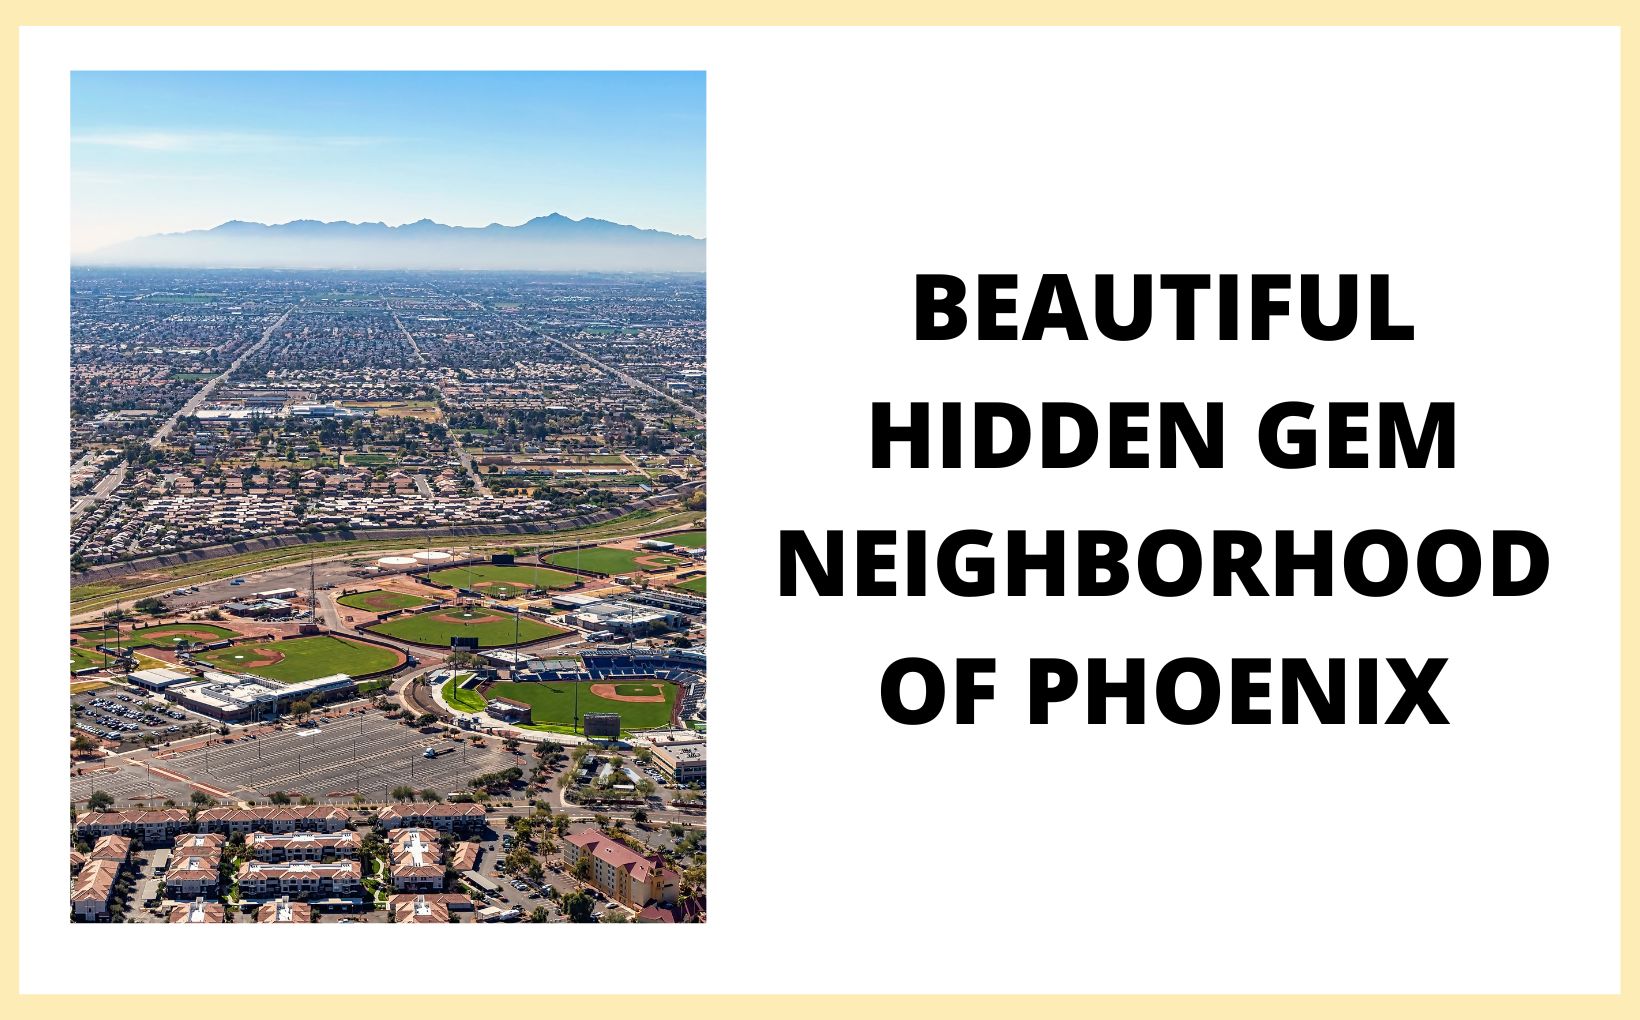 Phoenix hidden gem neighborhood feature image